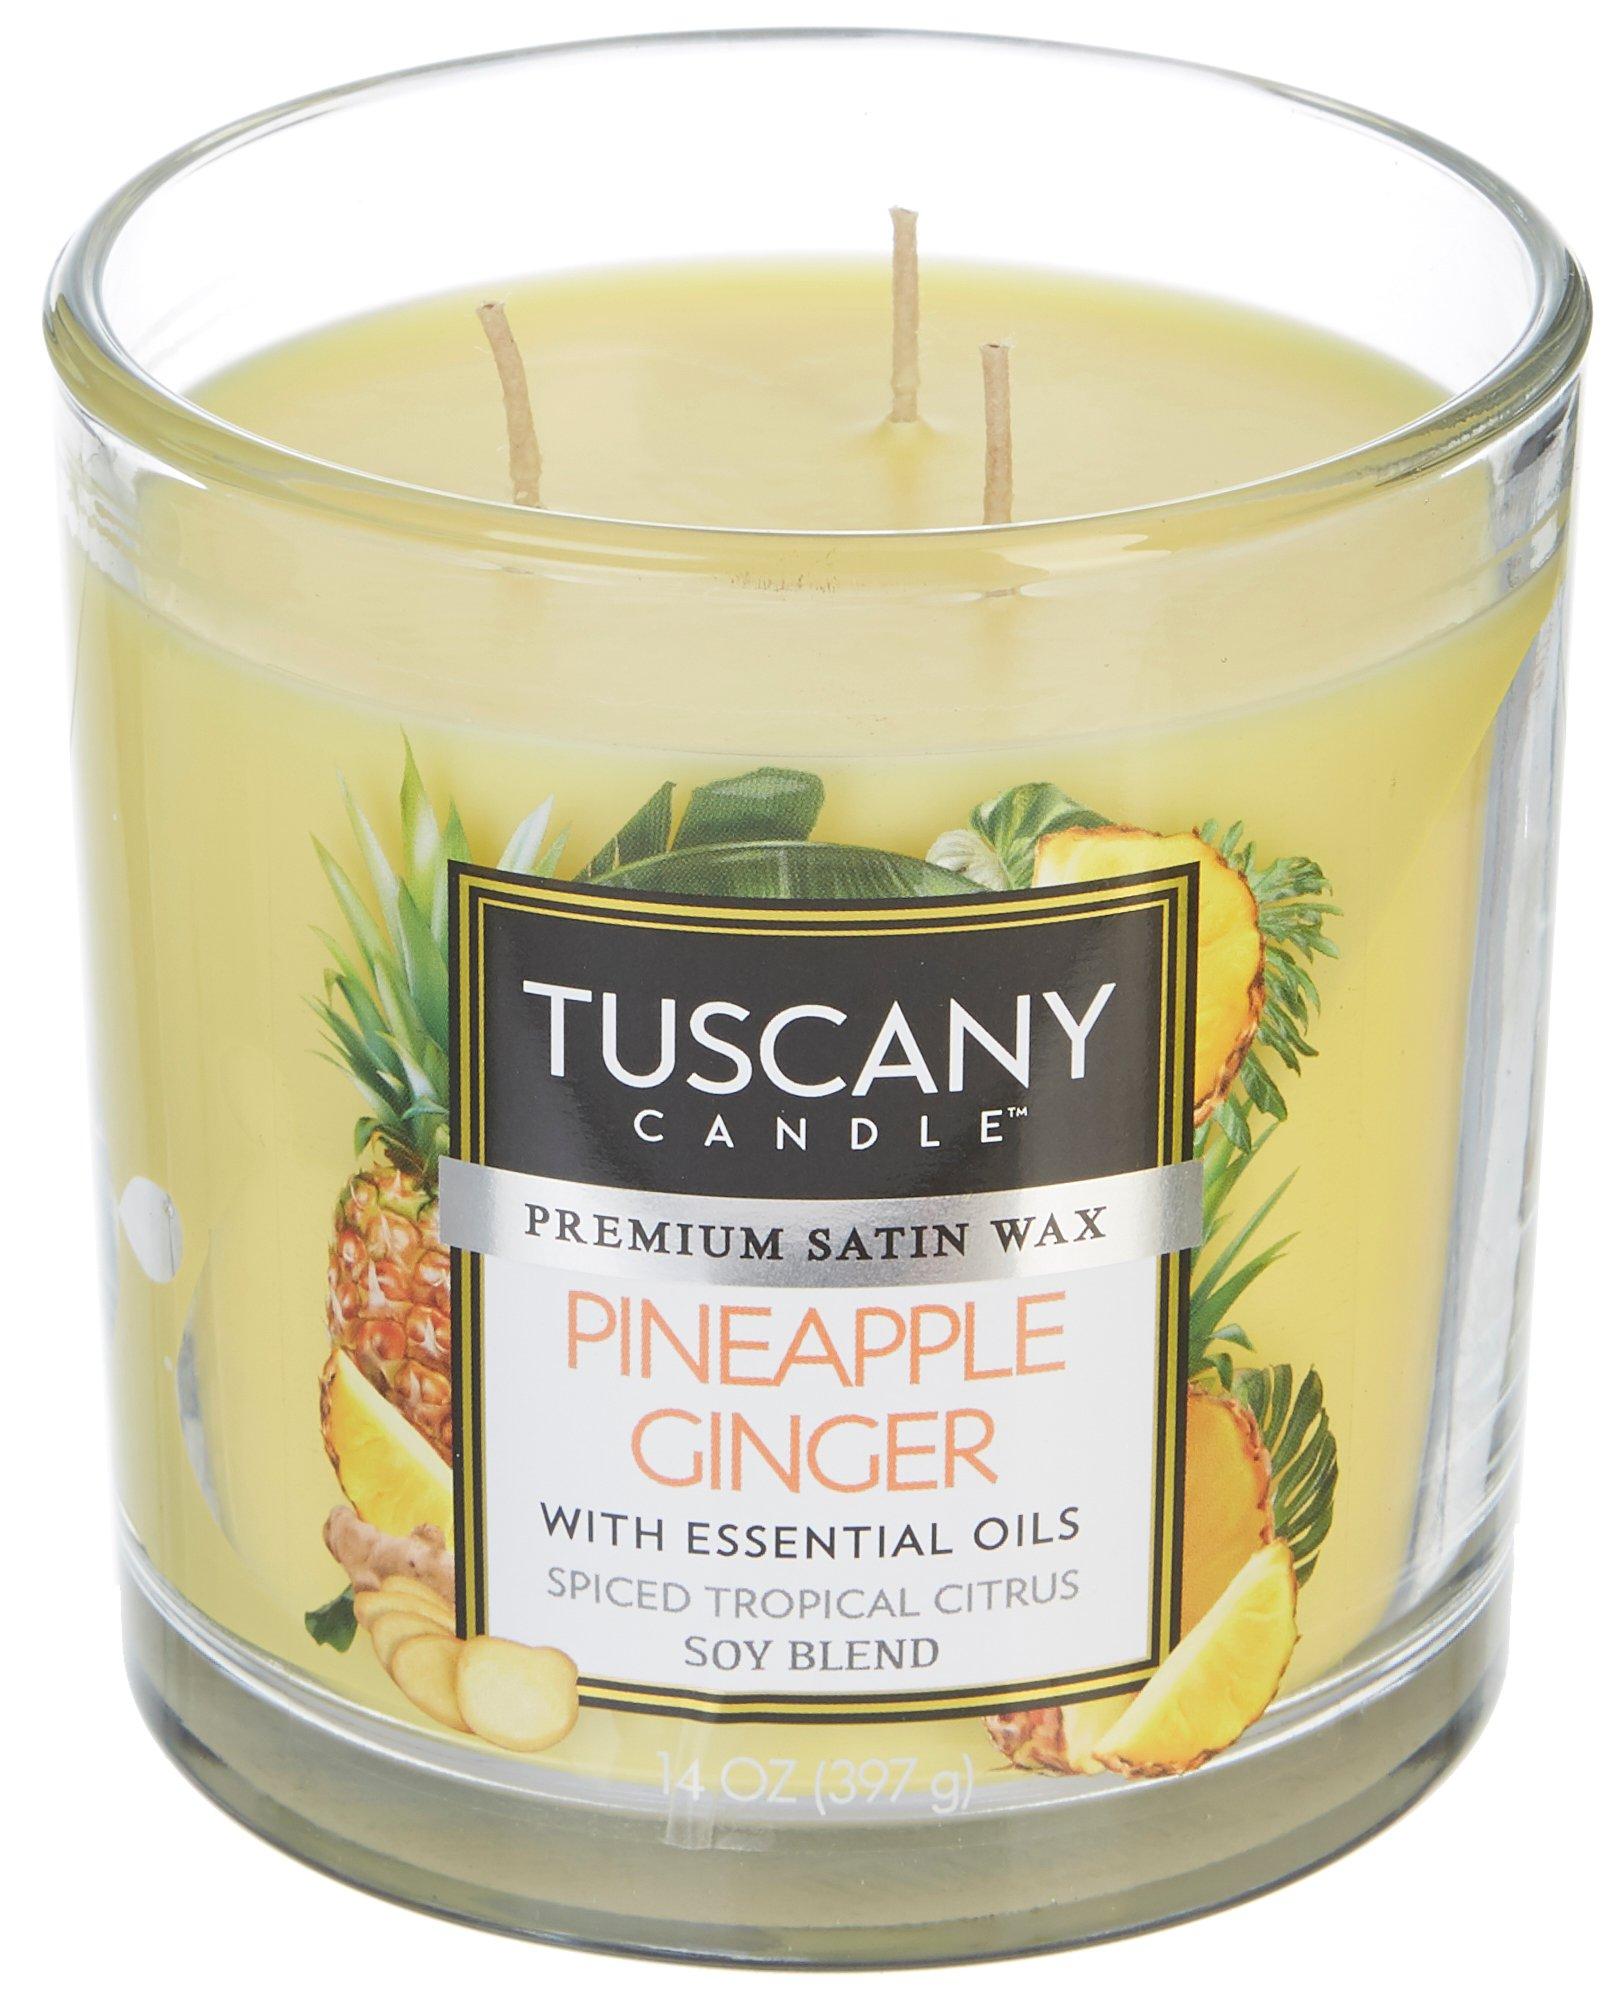 Tuscany 14 oz. Pineapple Ginger Soy Blend Jar